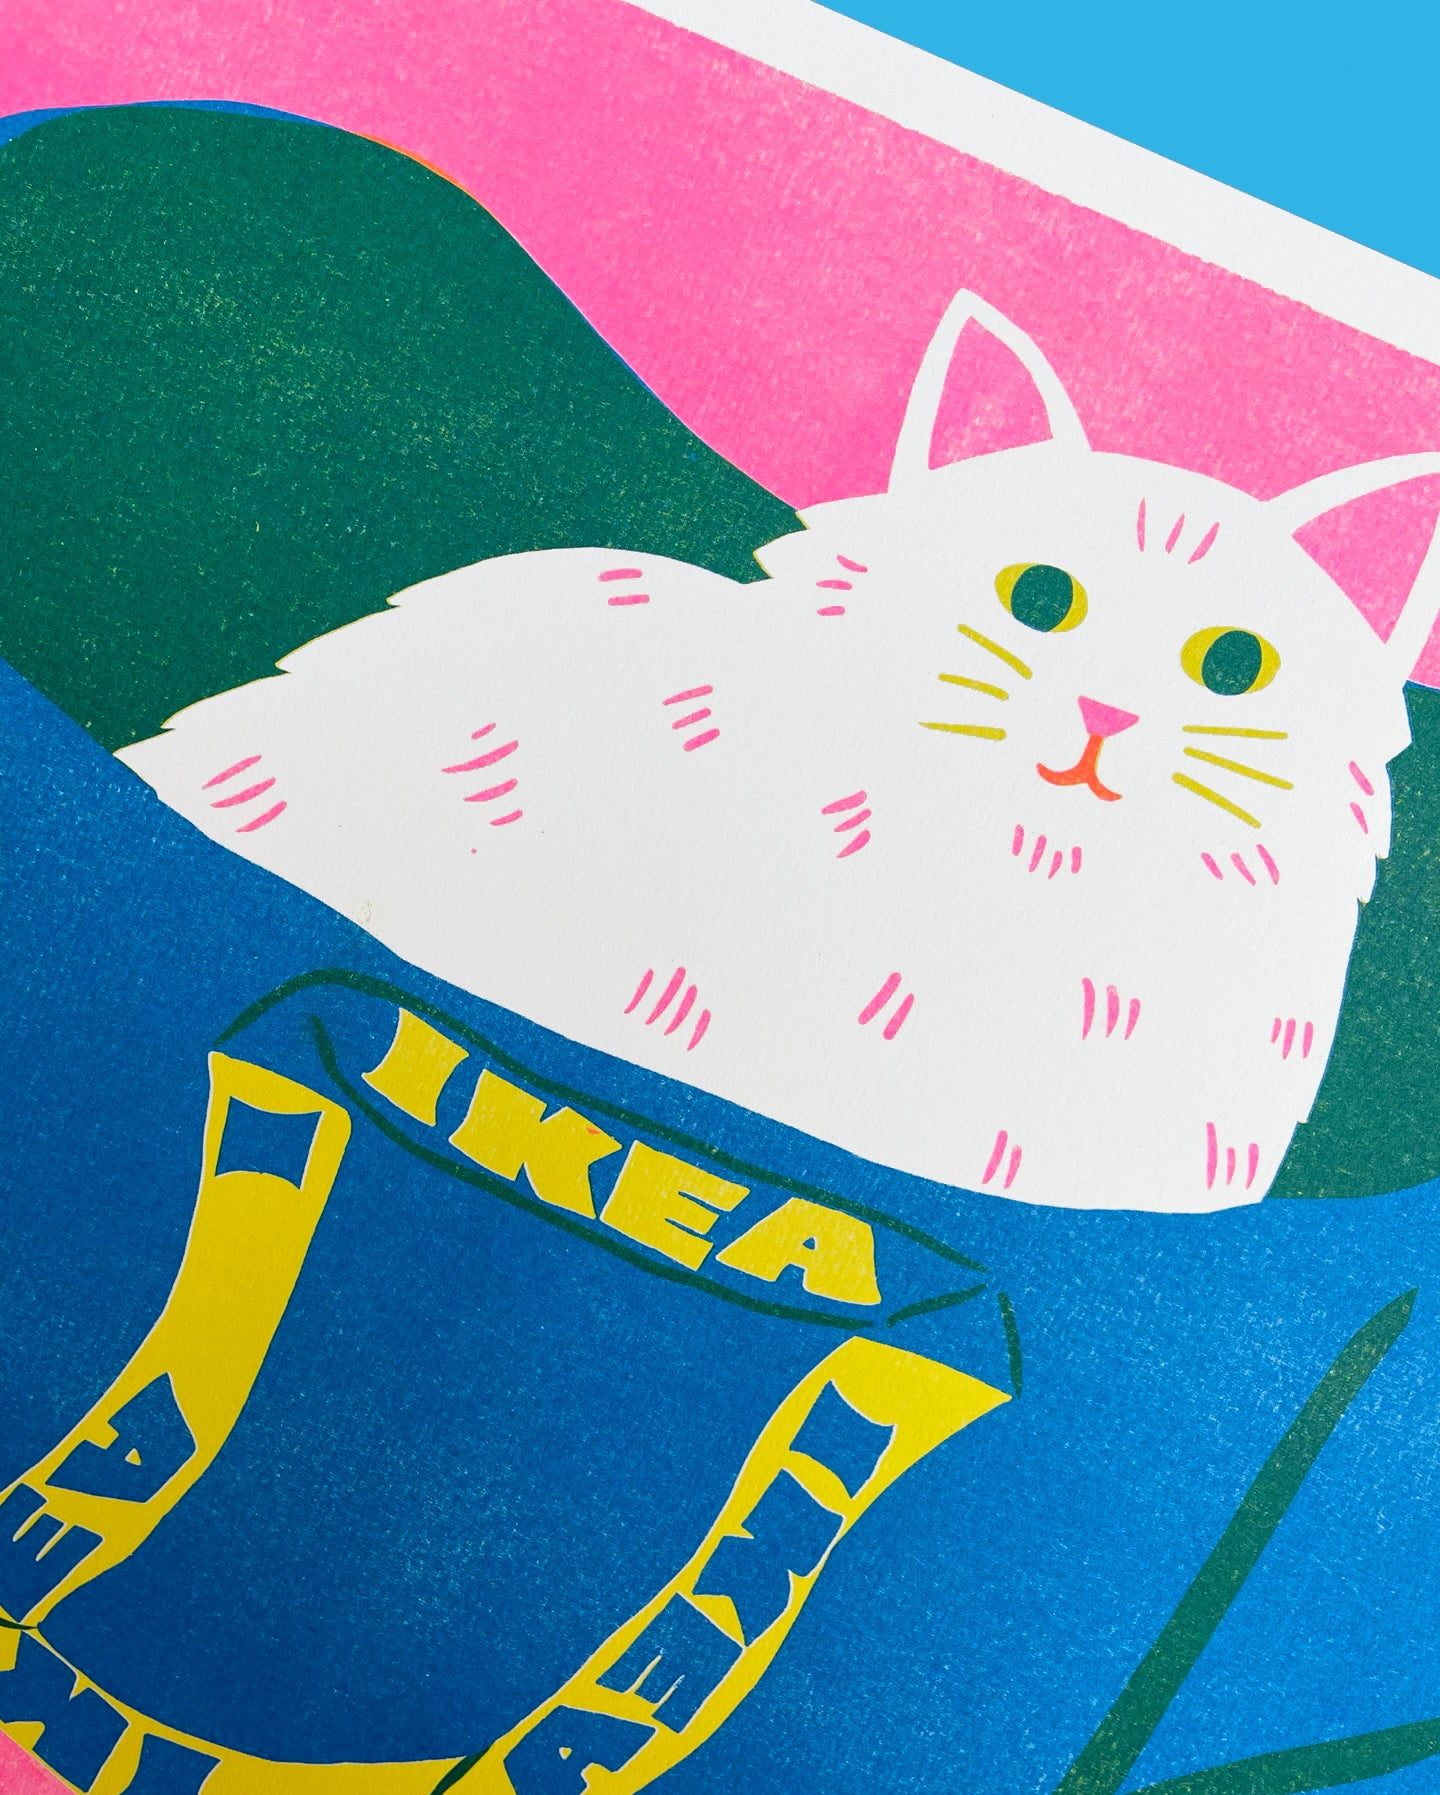 Ikea Bag Cat Print